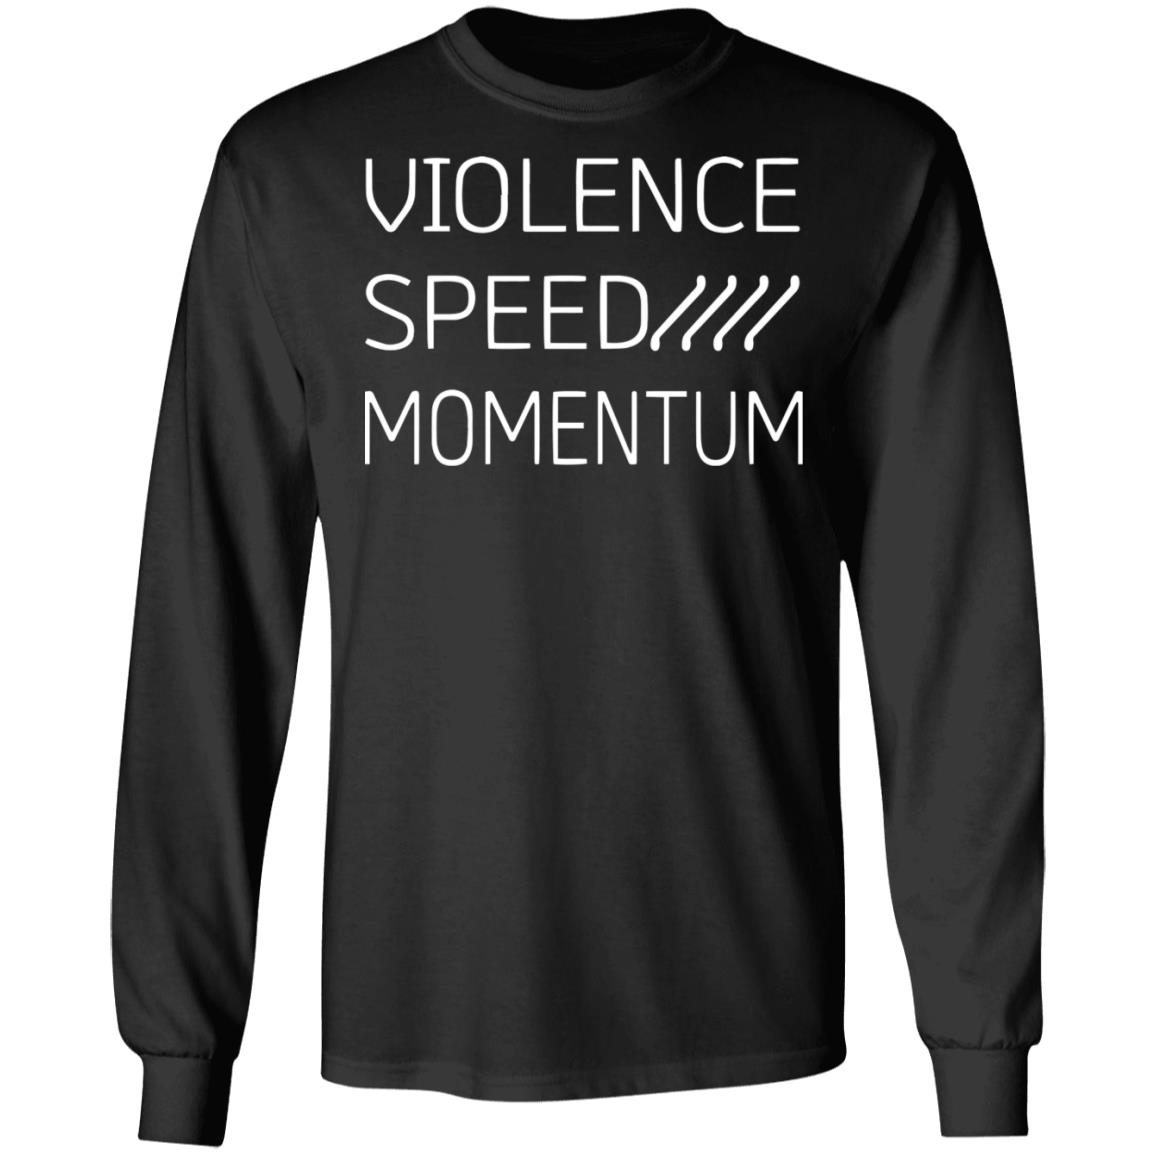 Violence speed momentum shirt, hoodie, long sleeve